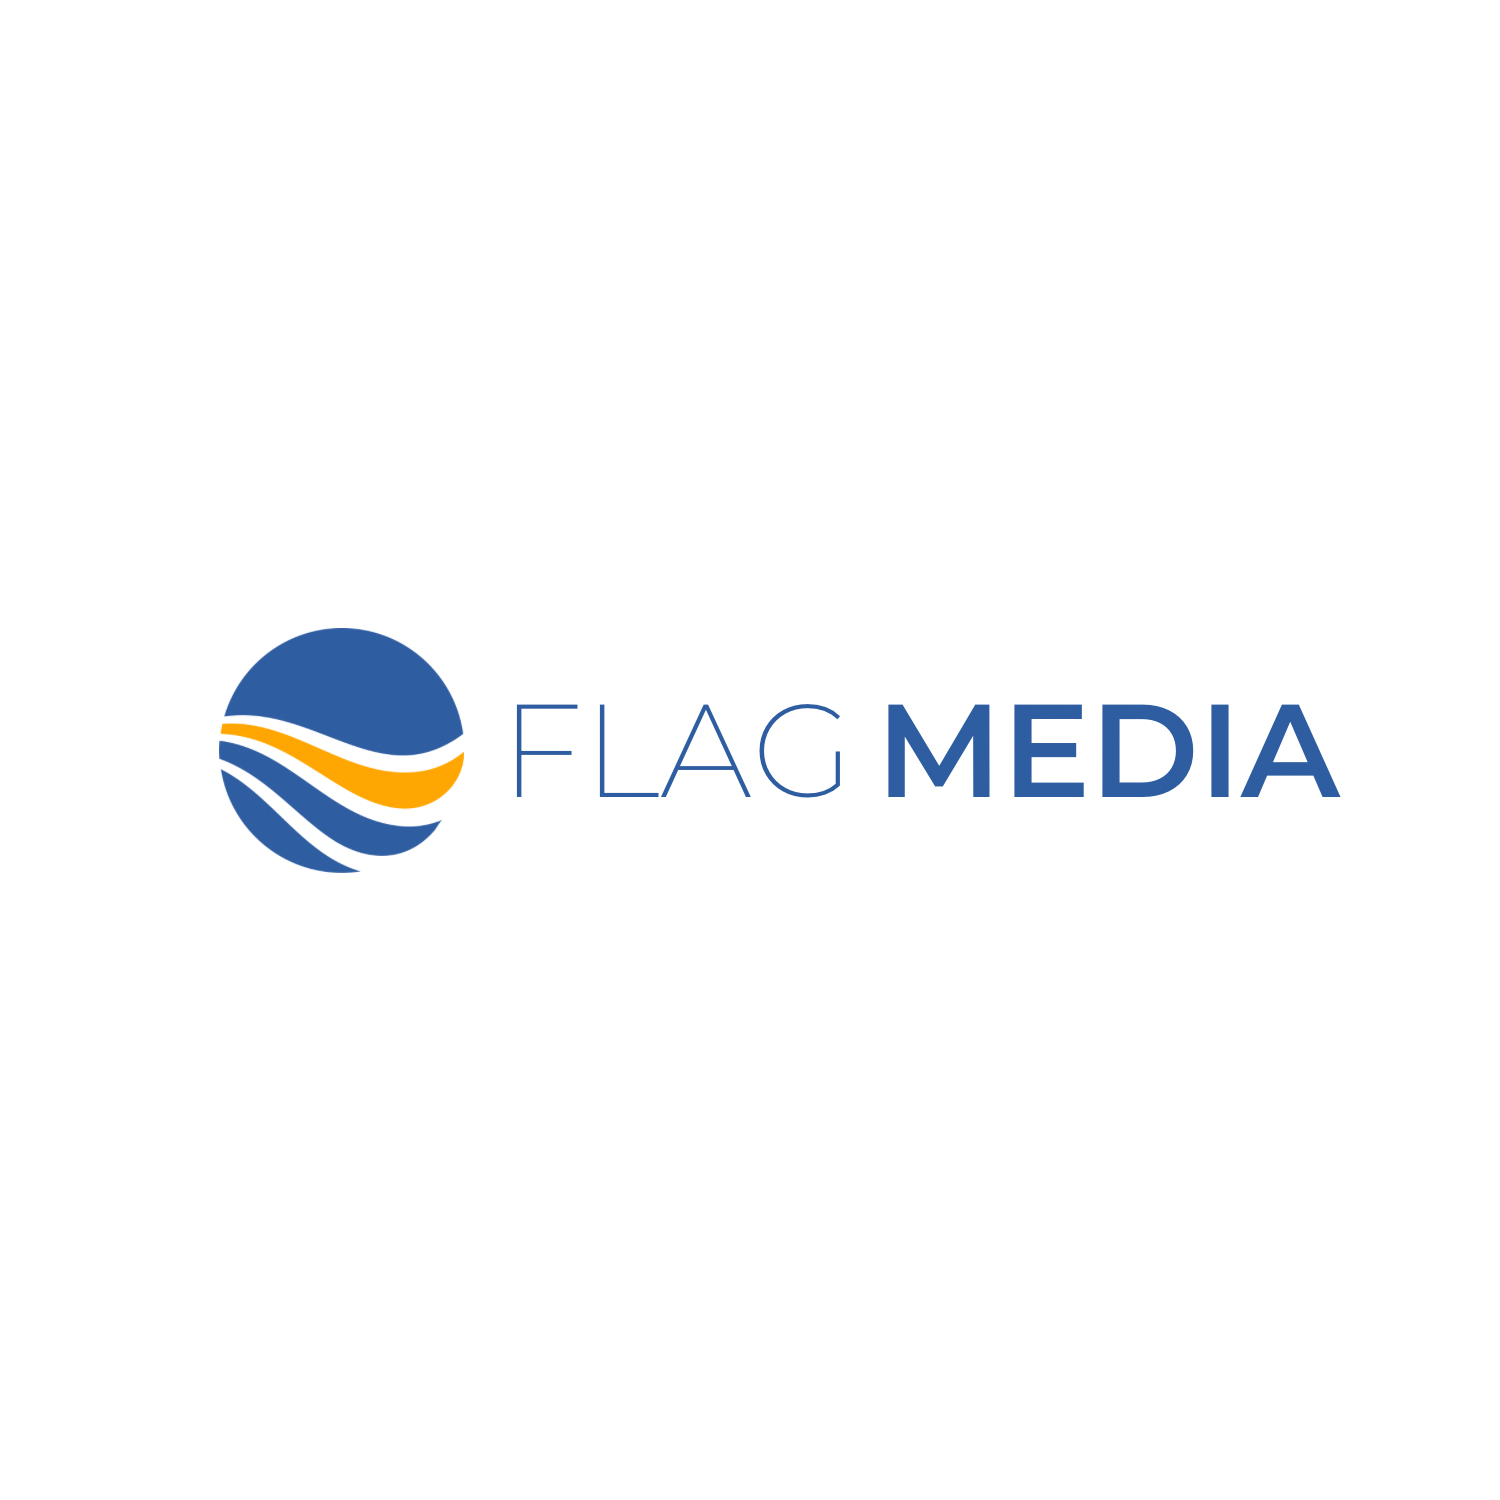 Flag Media Logo Image